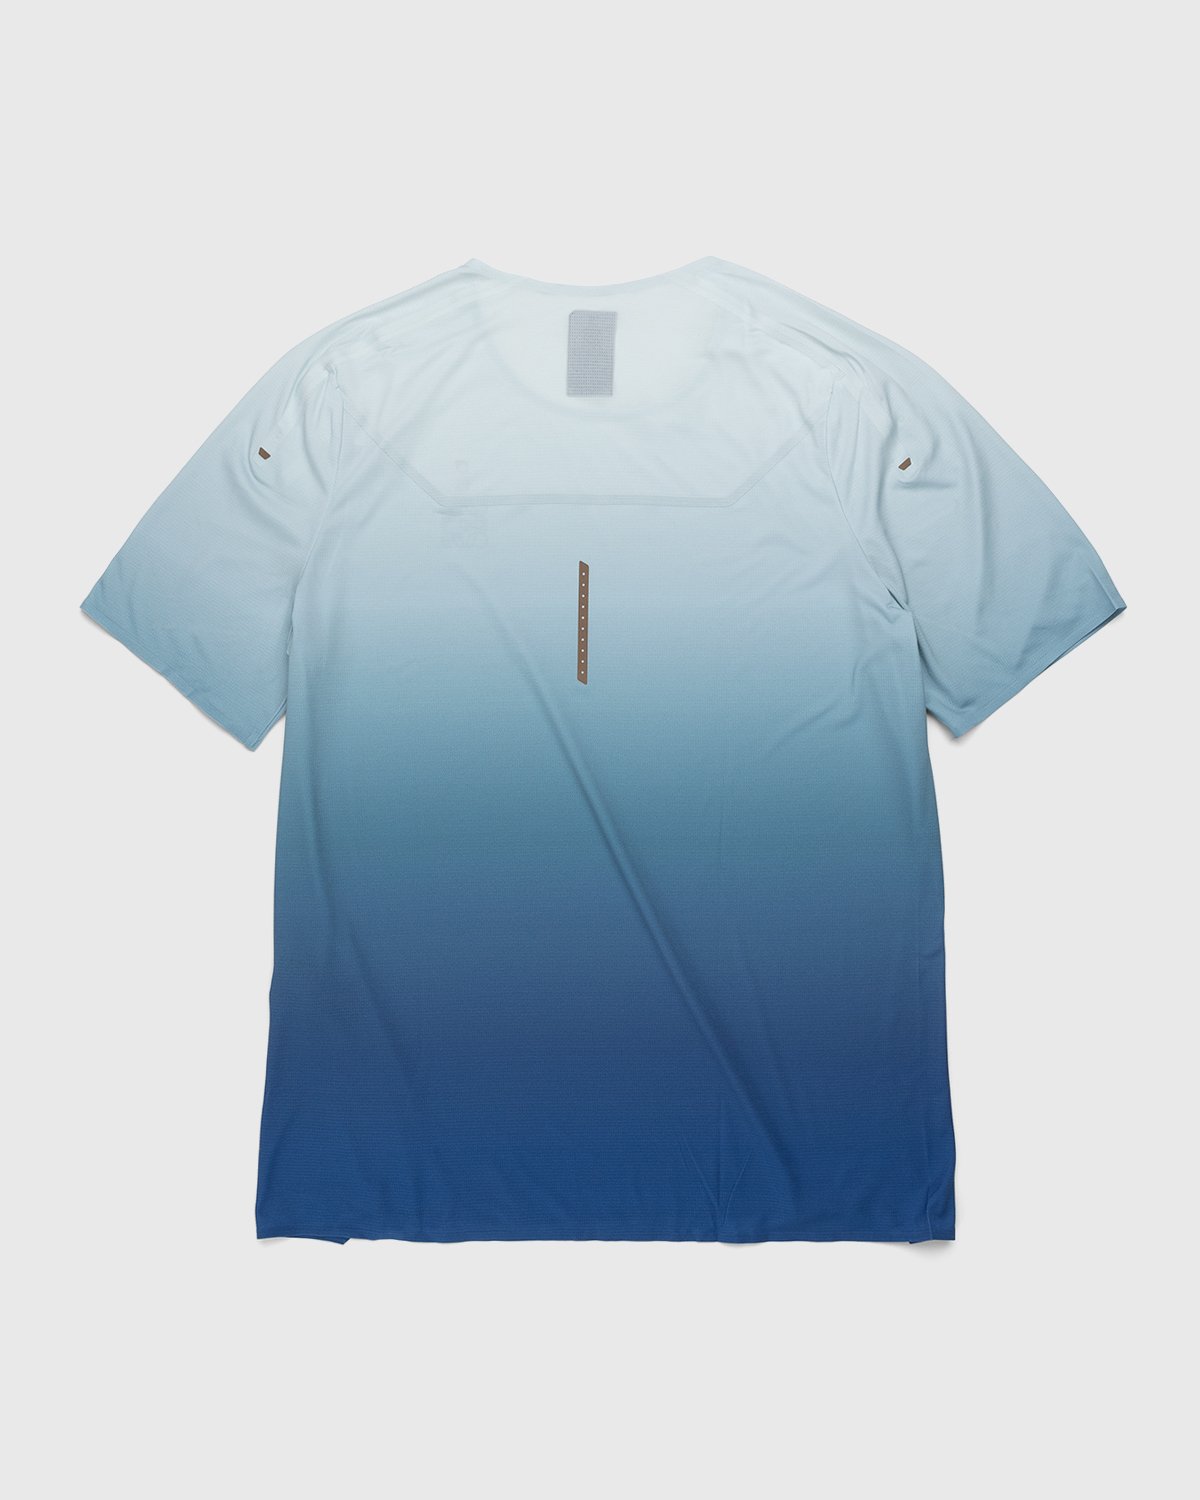 Loewe x On - Women's Performance T-Shirt Gradient Grey - Clothing - Blue - Image 2